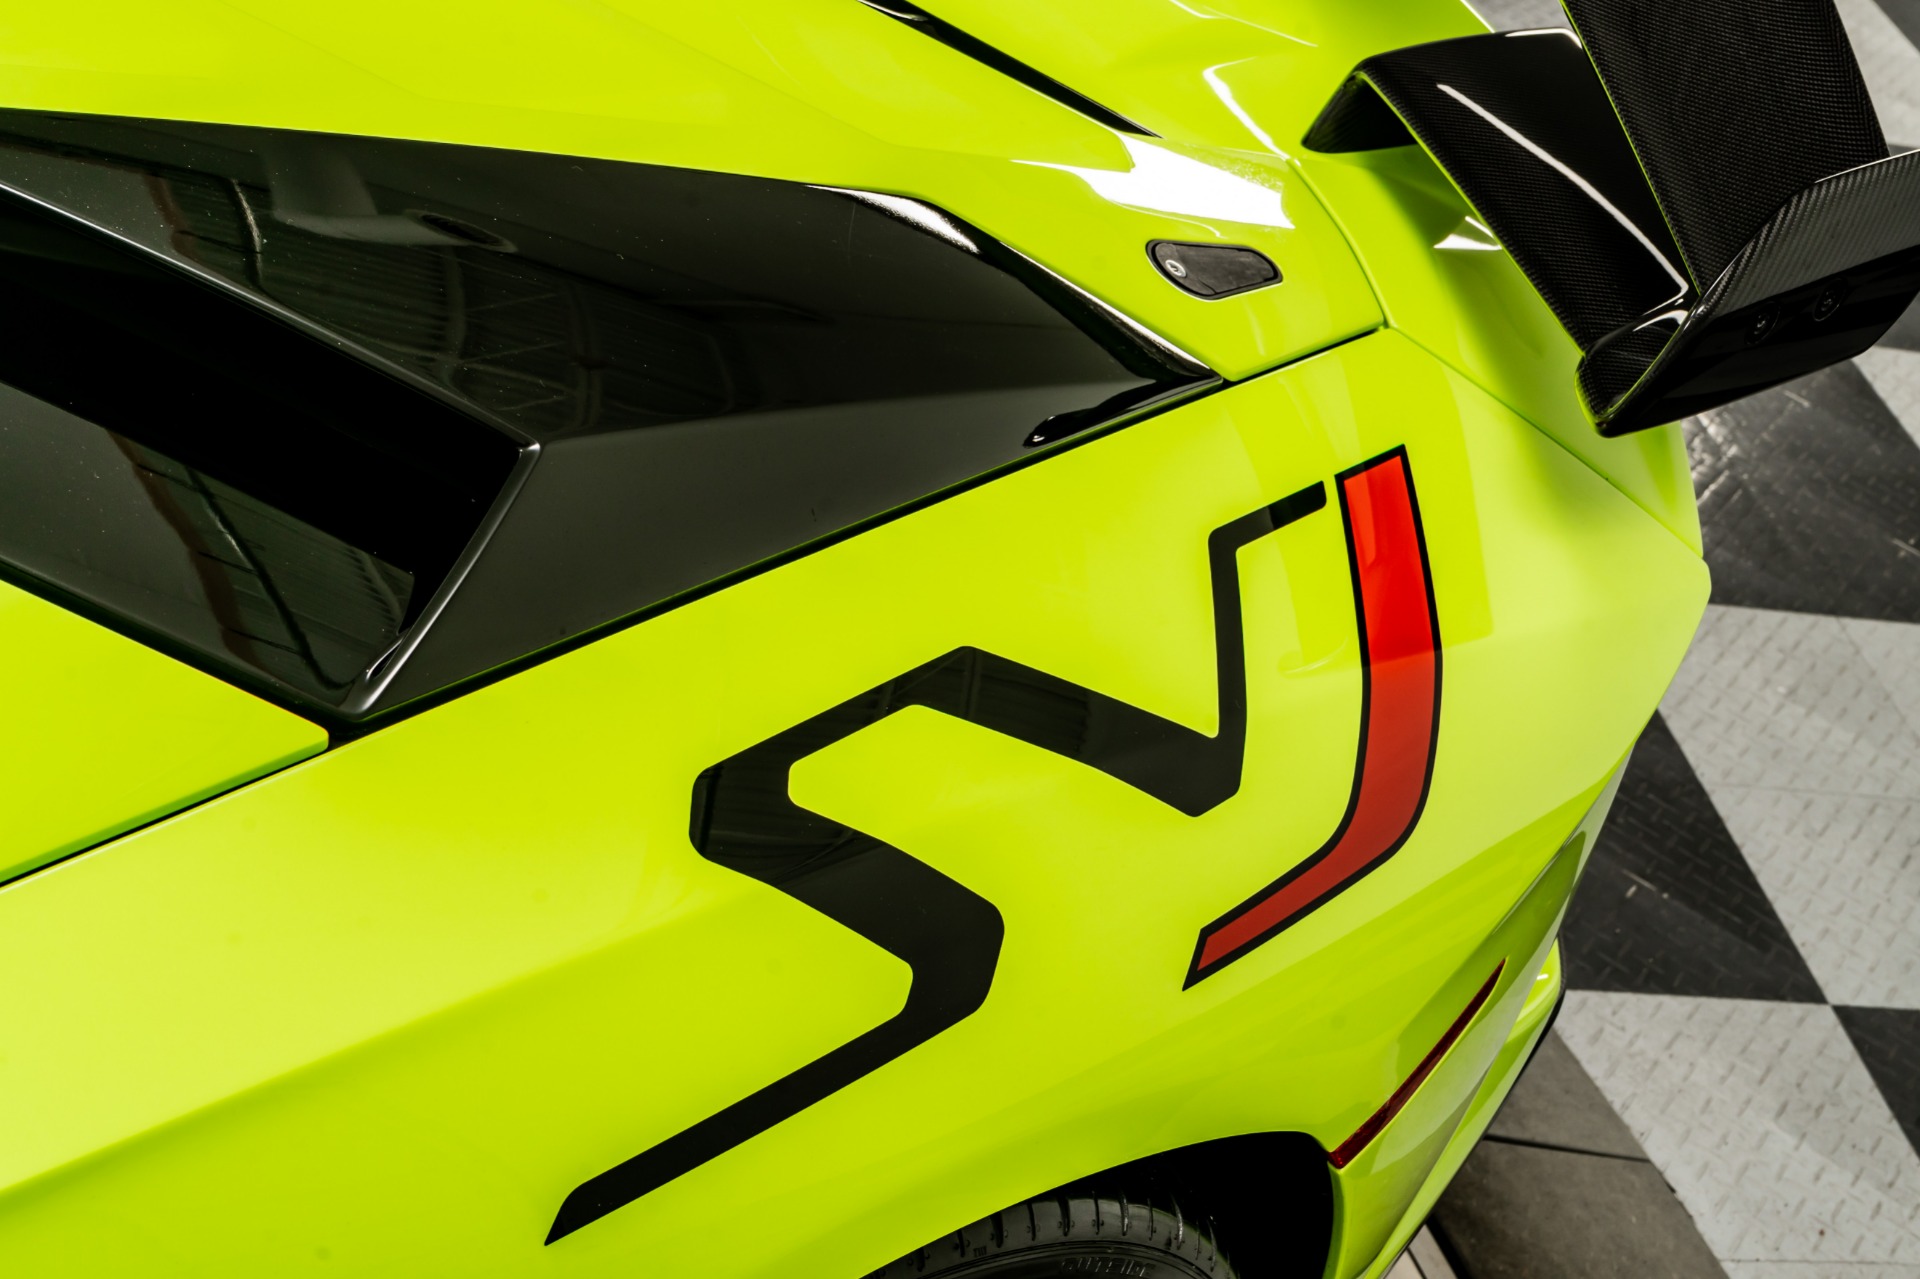 Aventador SVJ wallpaper by Diavxlx - Download on ZEDGE™ | 7355